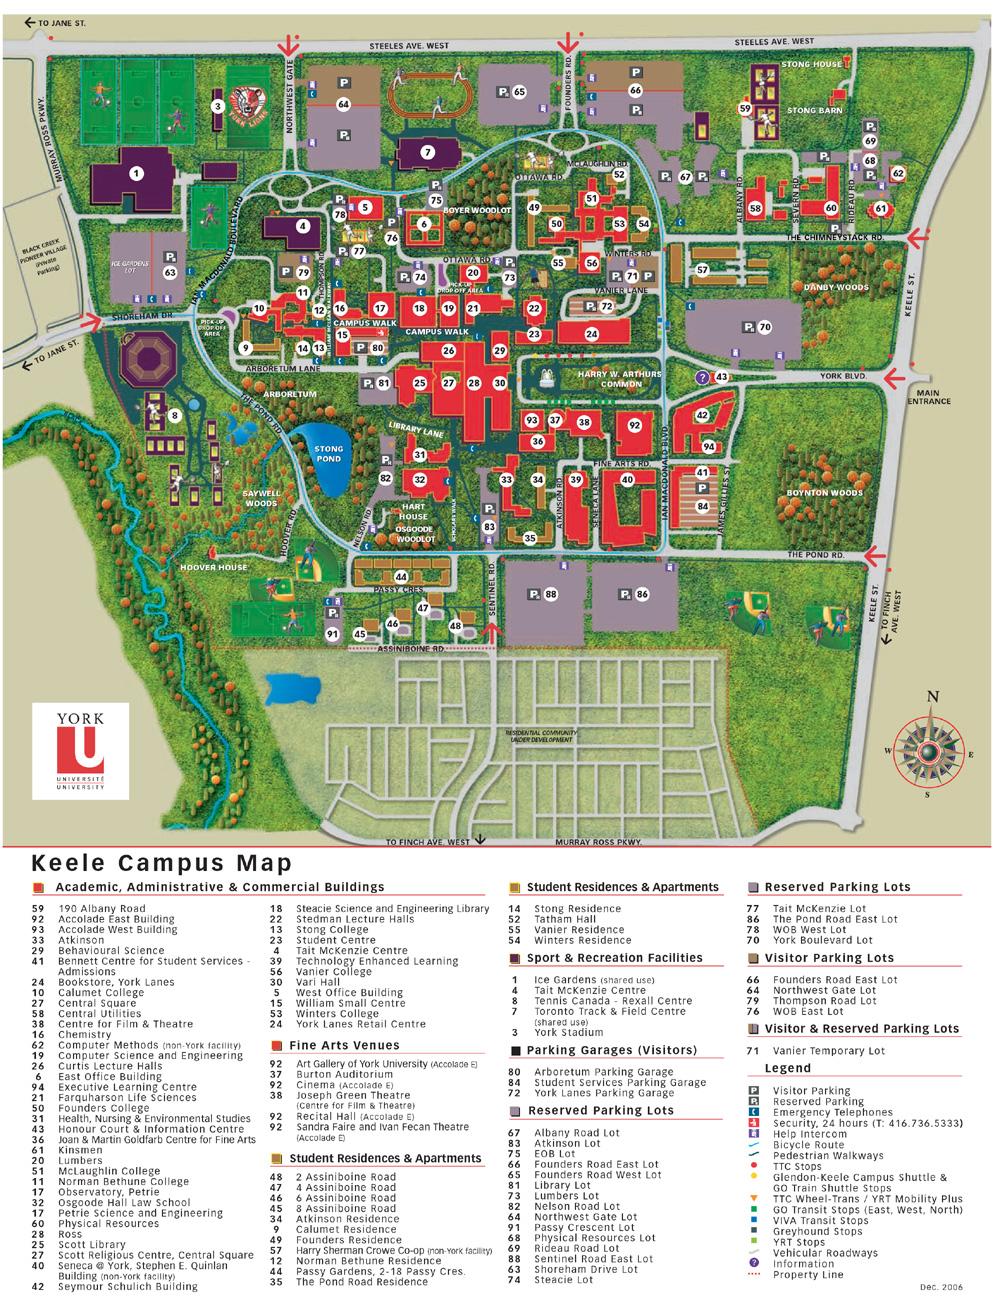 York university keele campus map - Map of York university keele campus ...